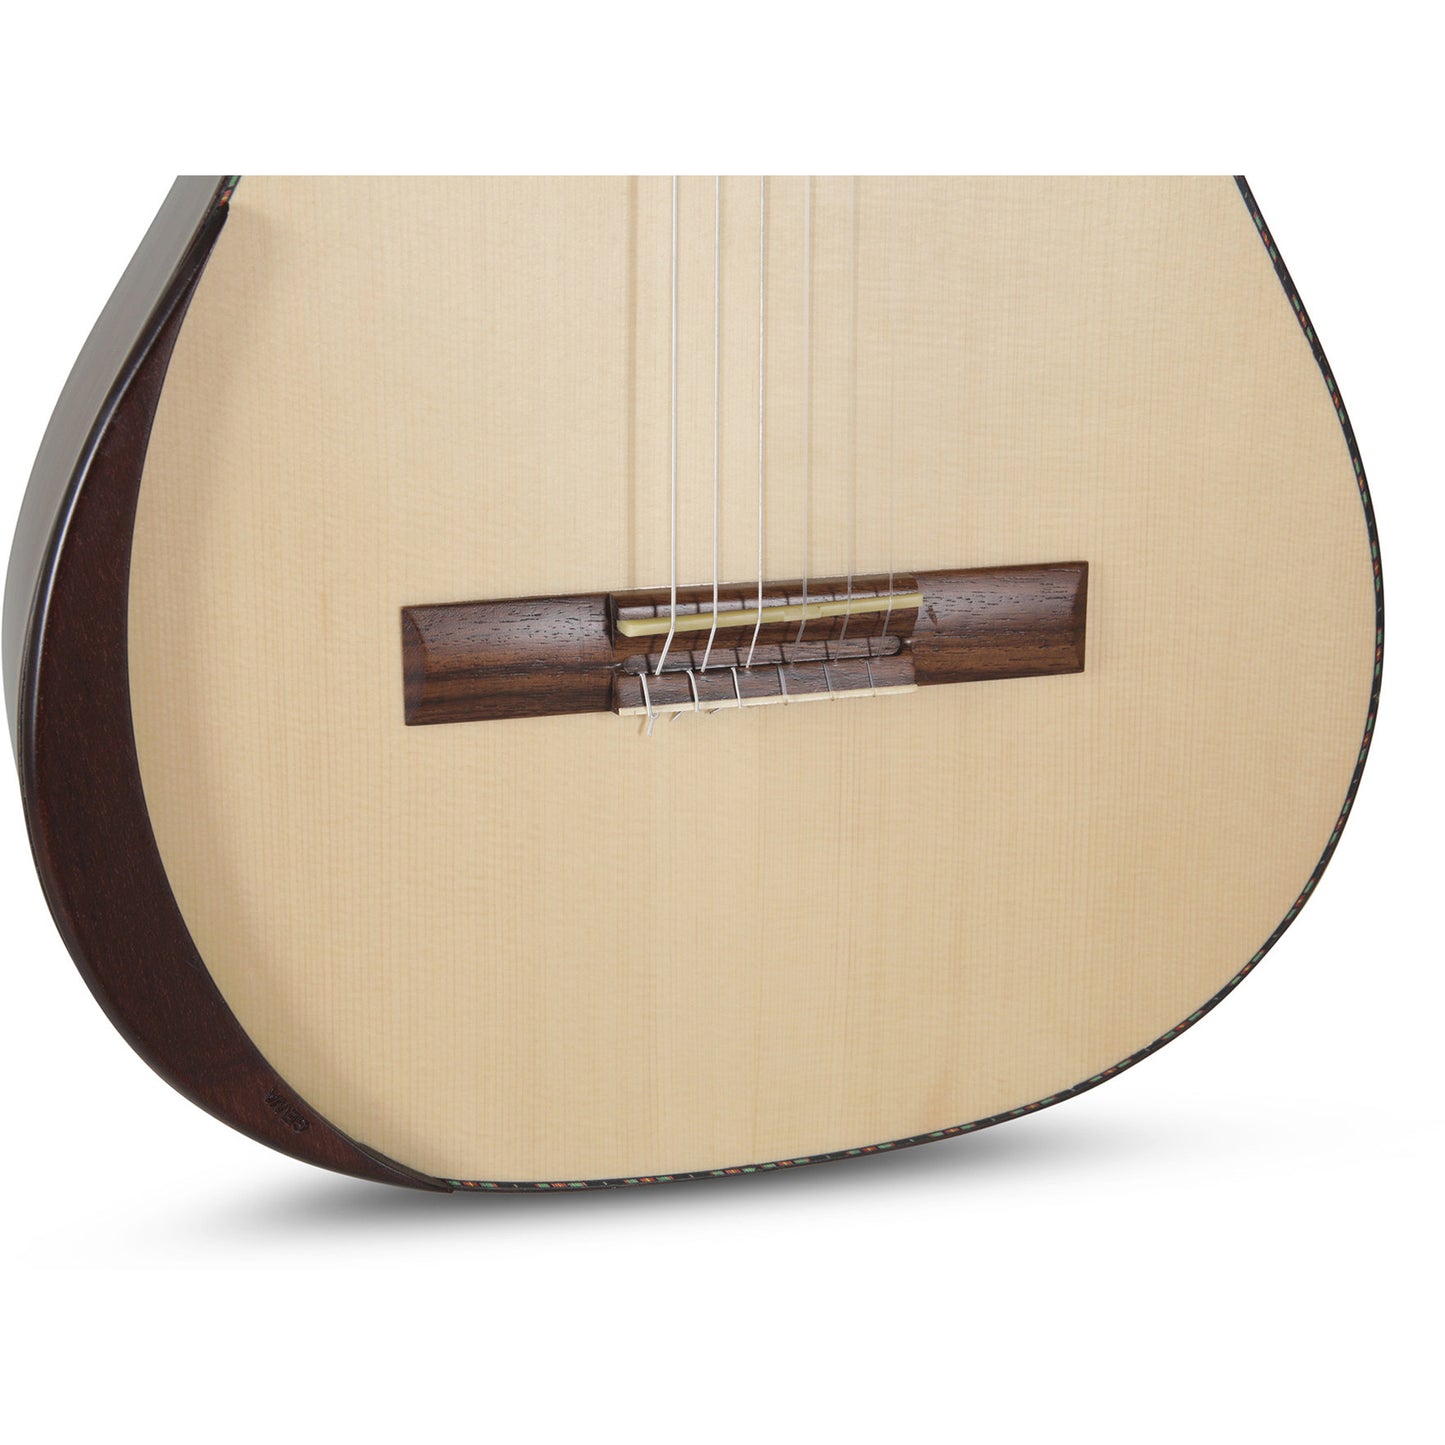 Manuel Rodriguez Magistral F-S Palisander Acoustic Guitar - Solid Spruce Top